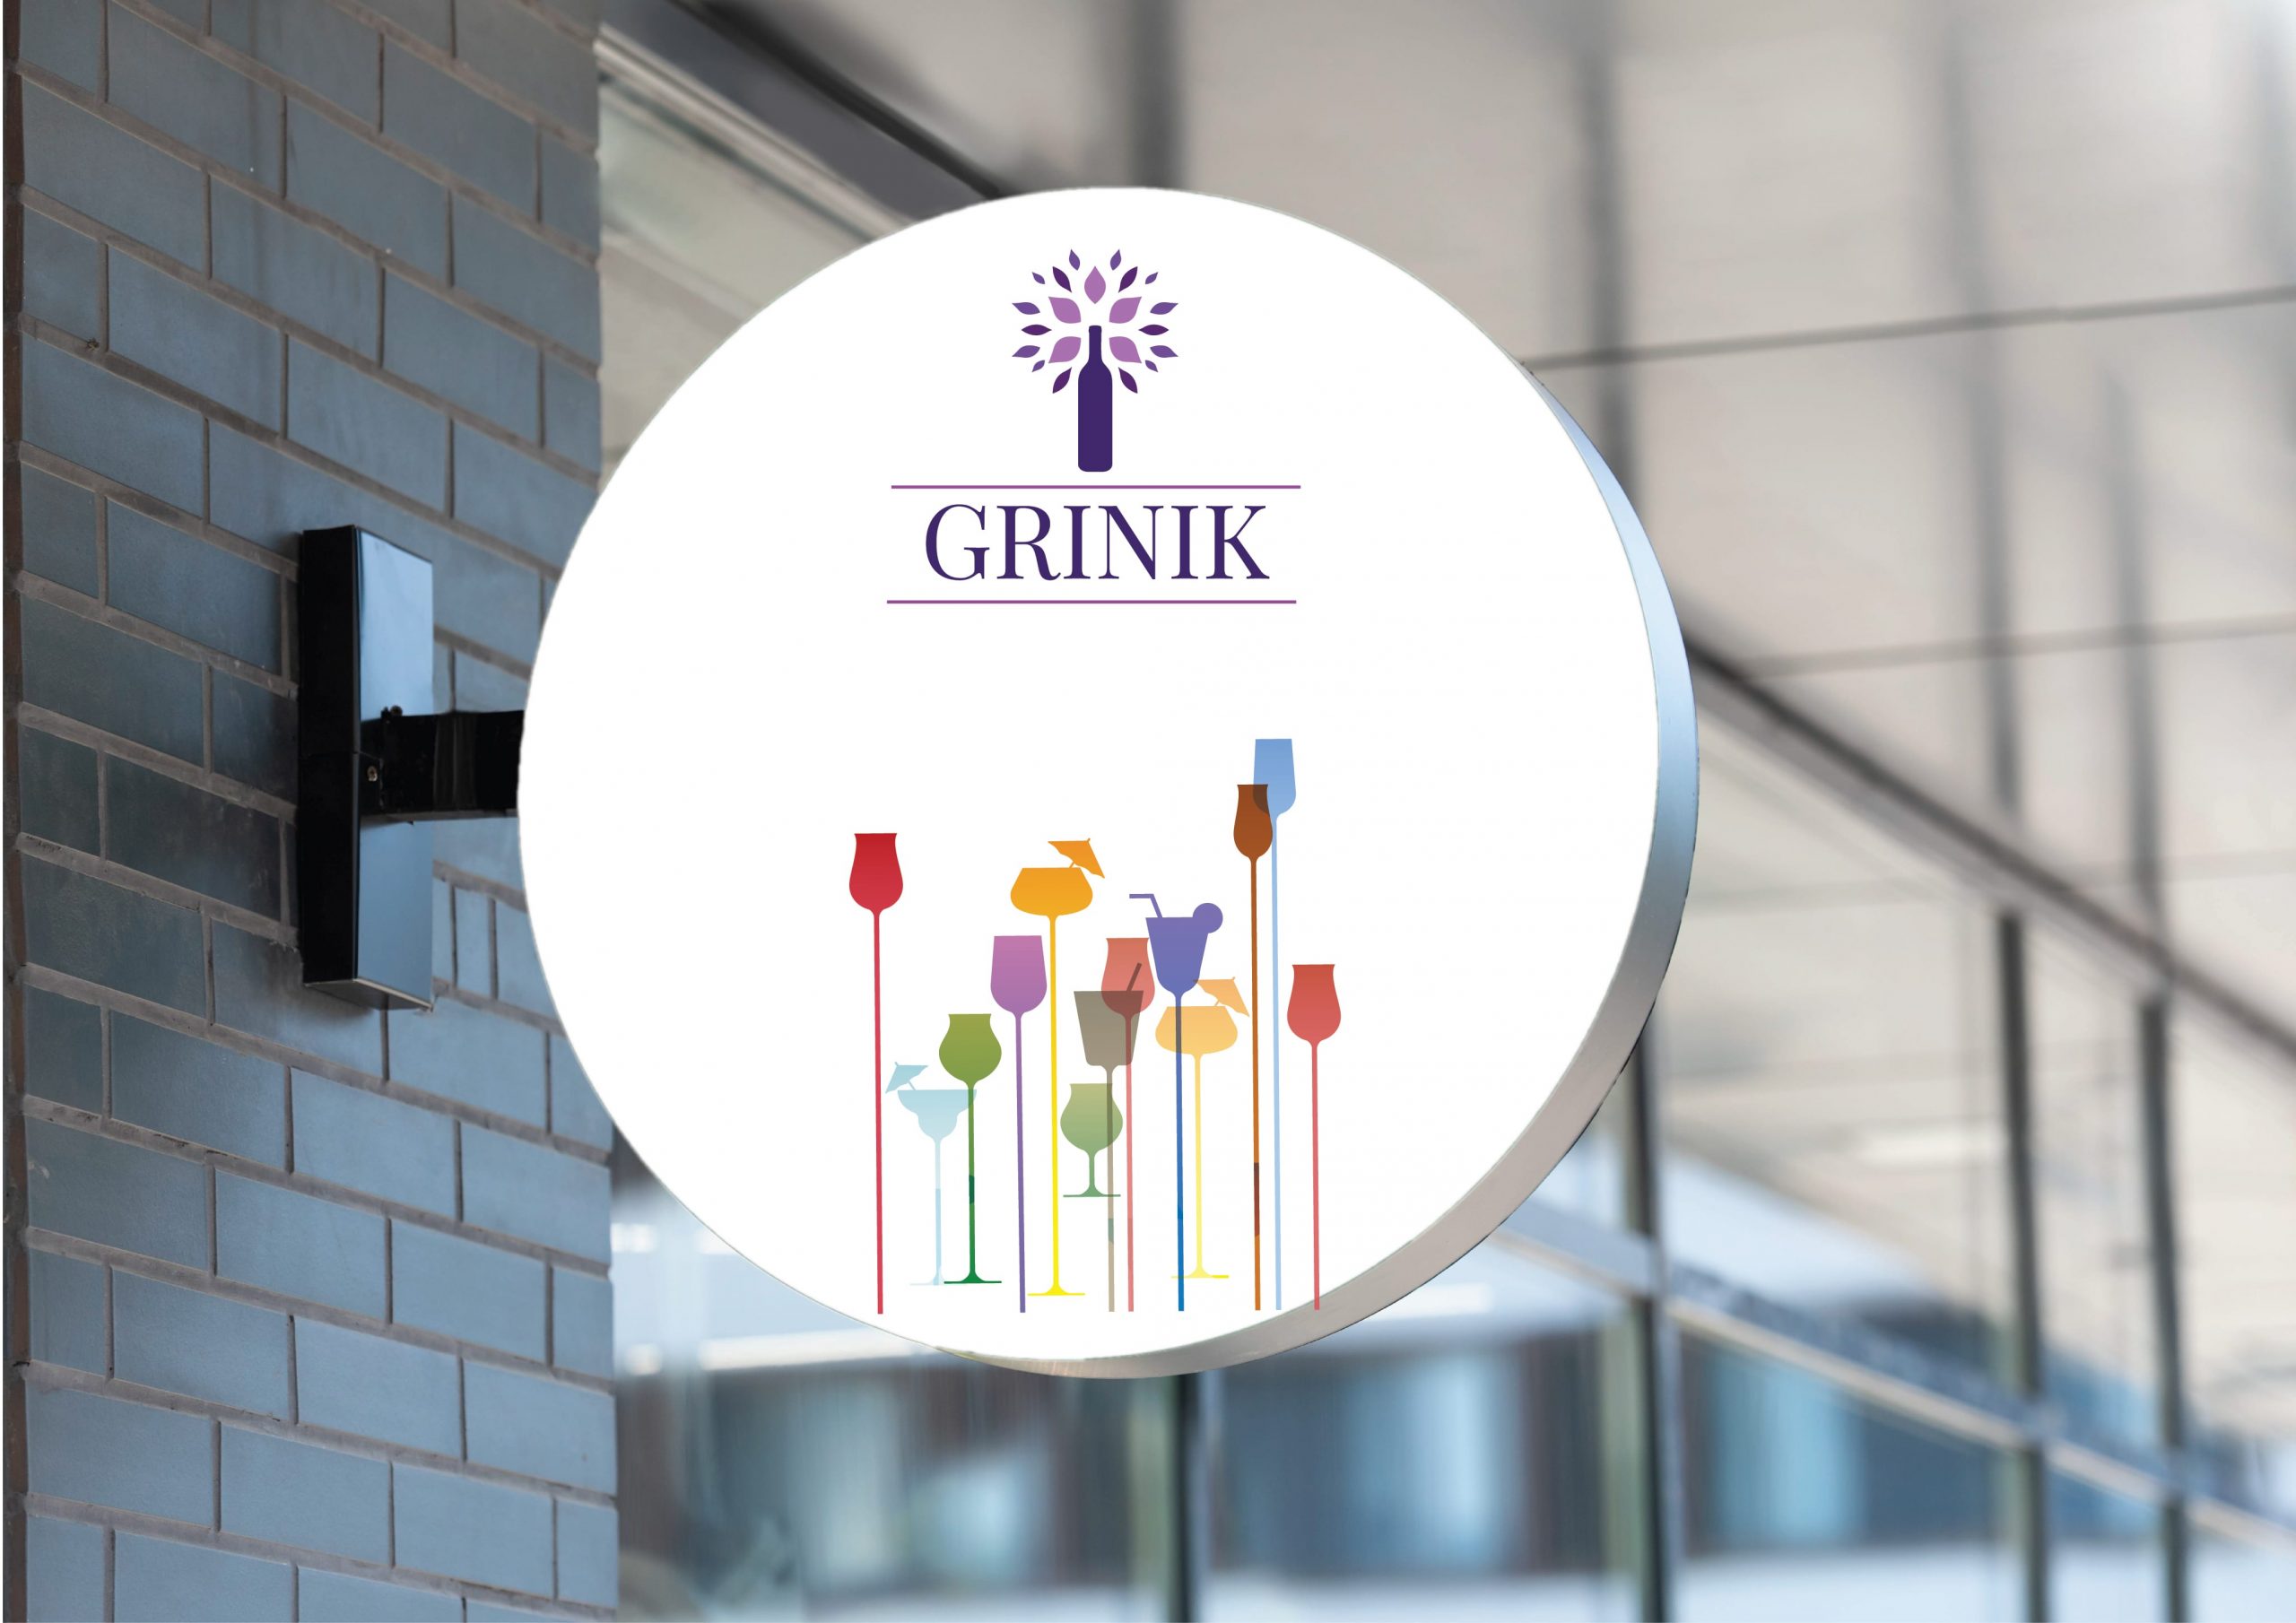 Logo Design Company - Grinik<br />
